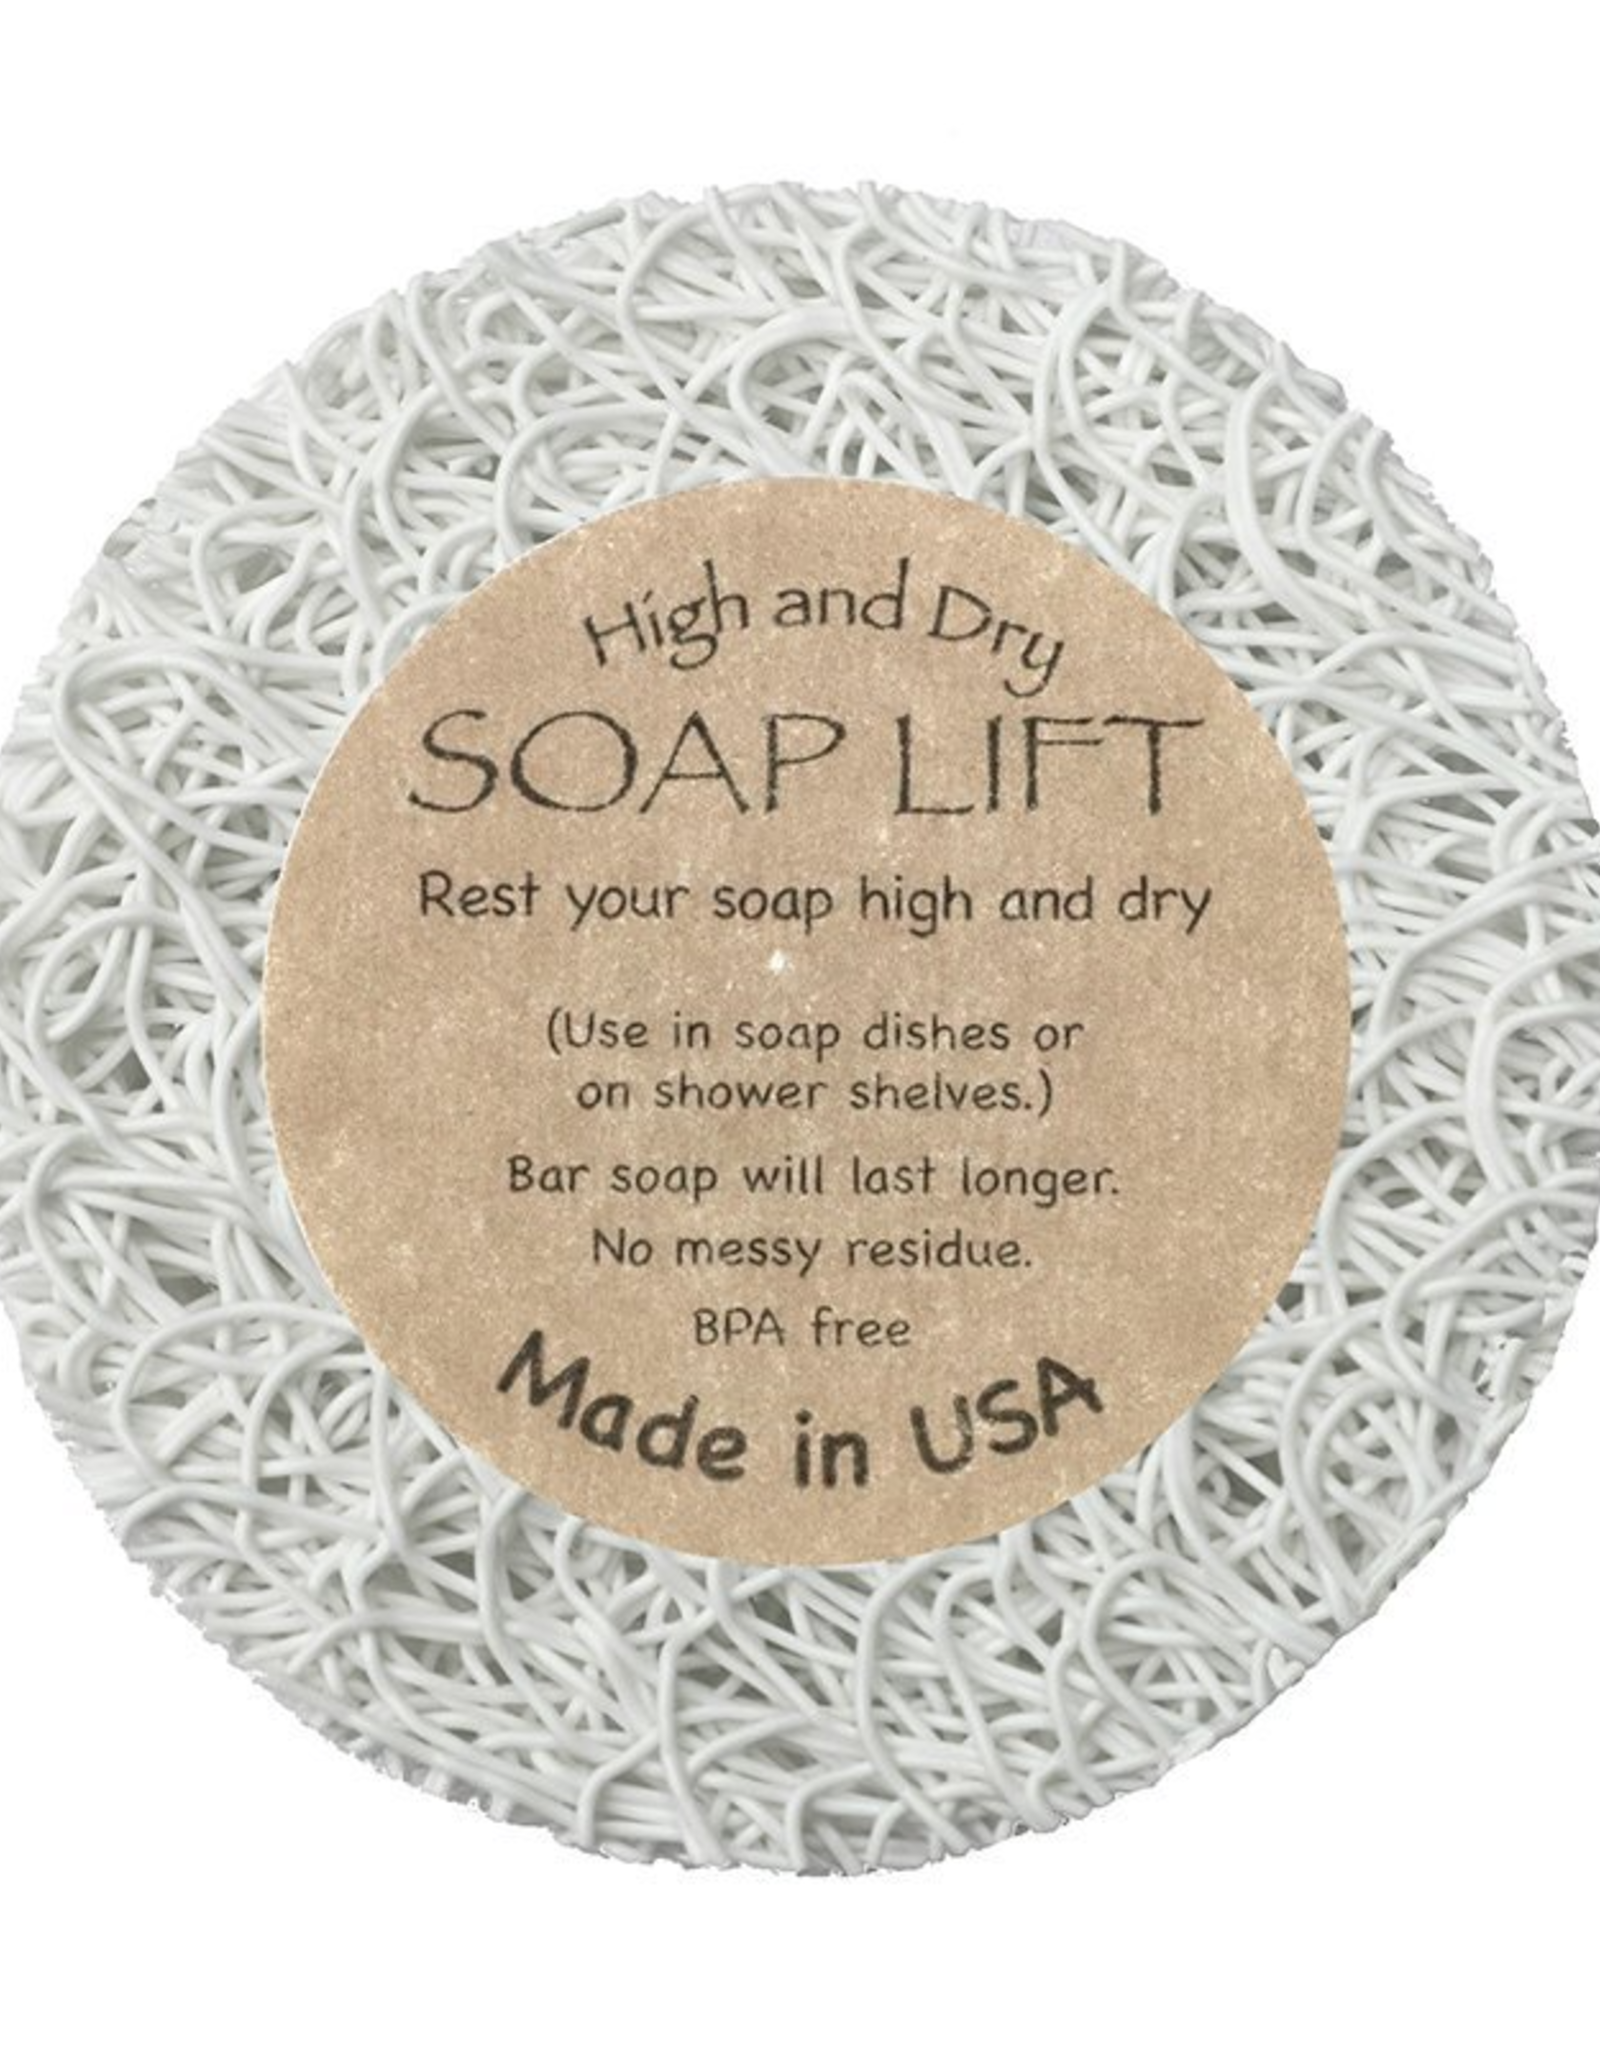 Soap Lift Plant Based Soap Lift Round